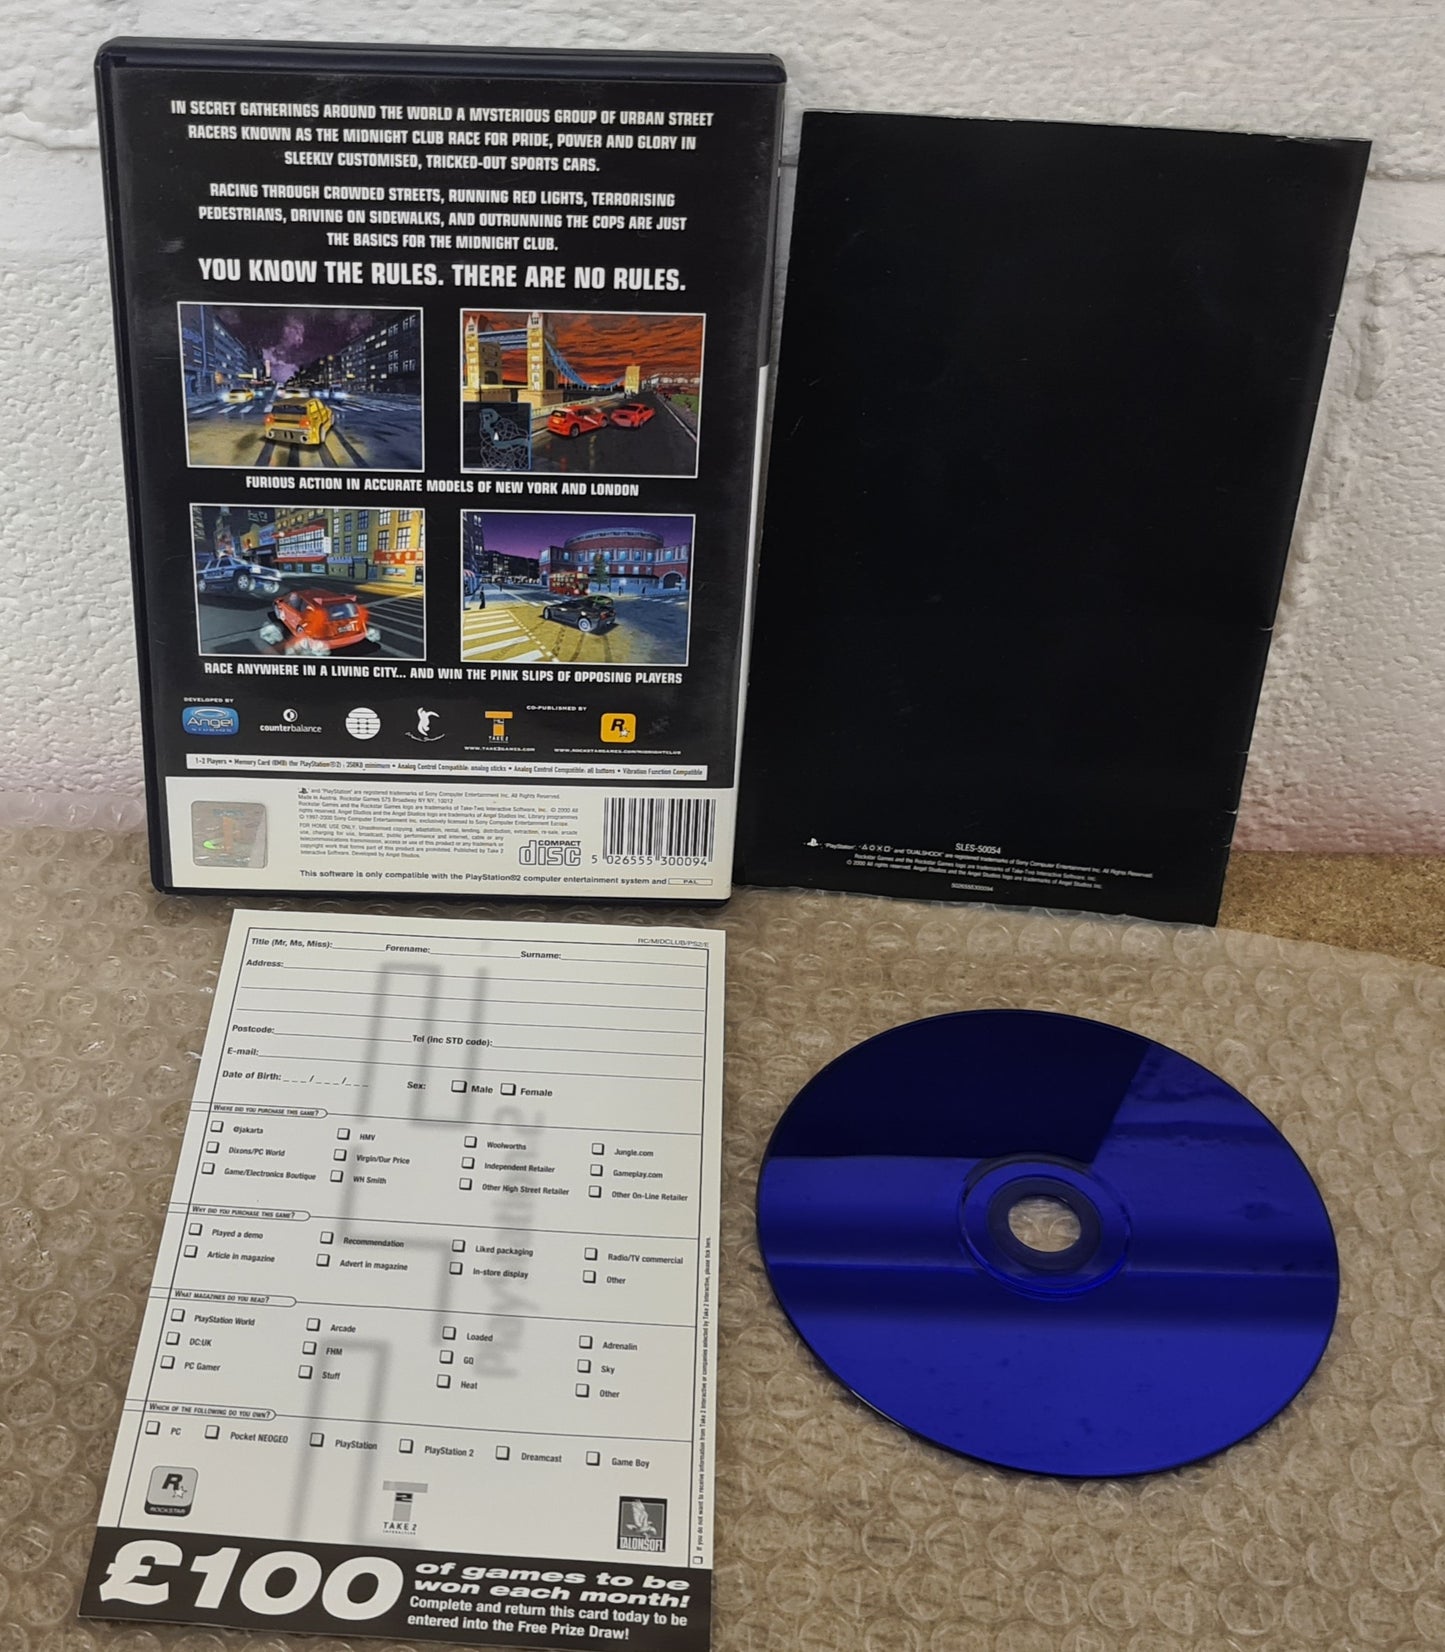 Midnight Club Black Label Sony Playstation 2 (PS2) Game